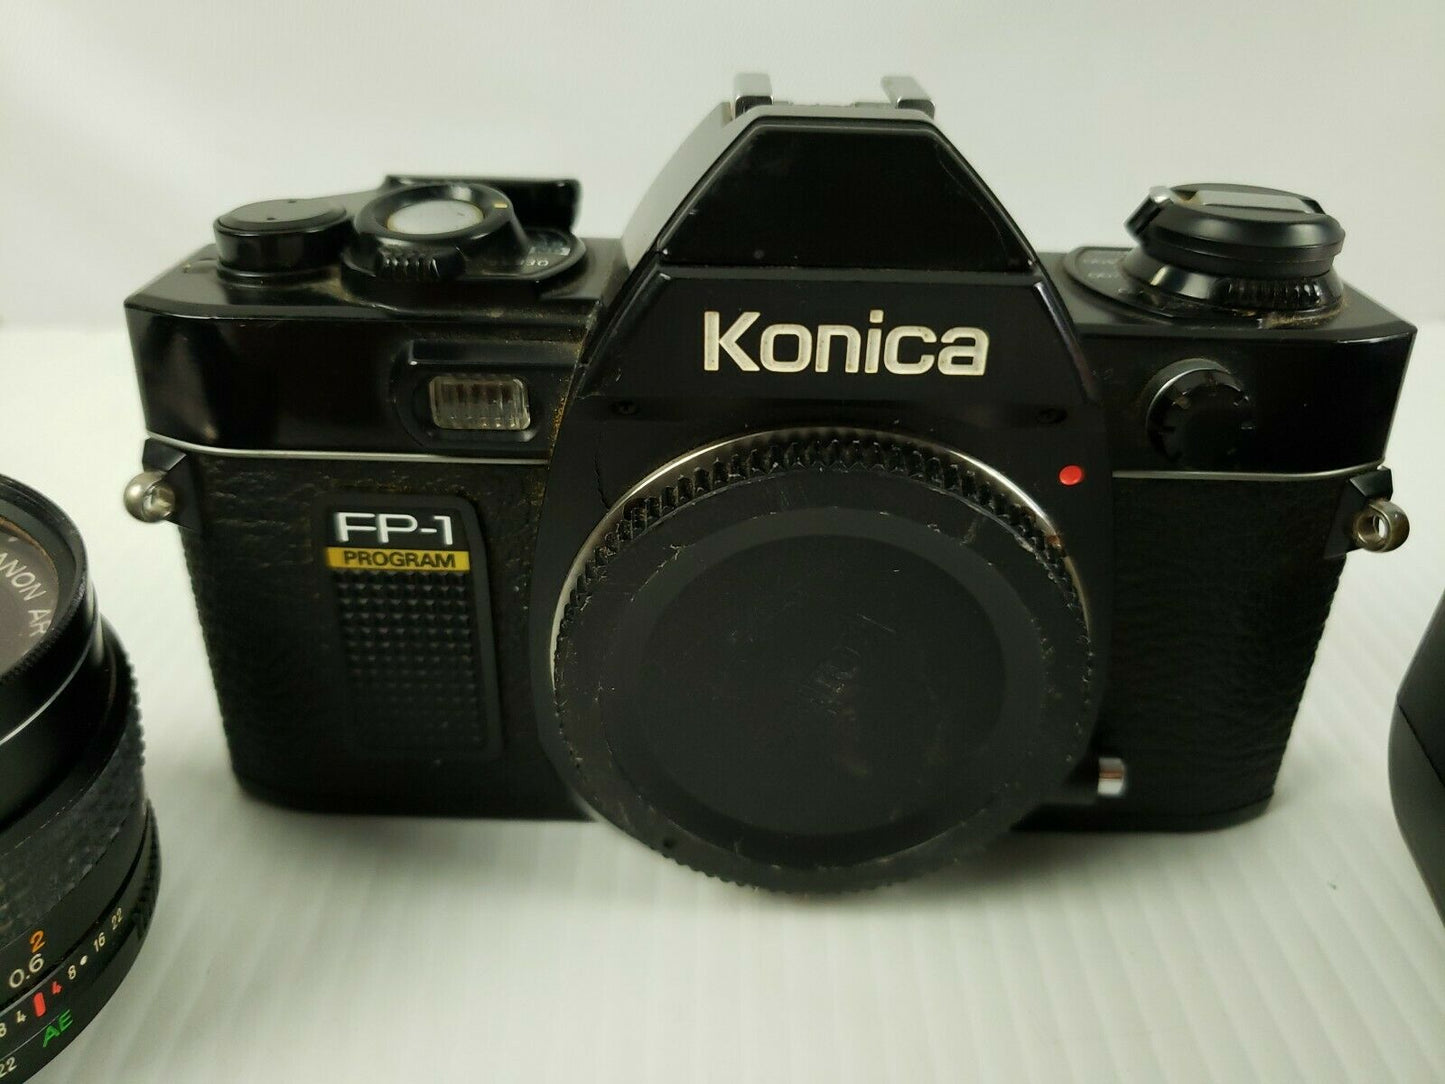 Konica FP-1 & Konica Hexanon AR 50mm F1.8 & Sunpak auto 322 D Needs battery